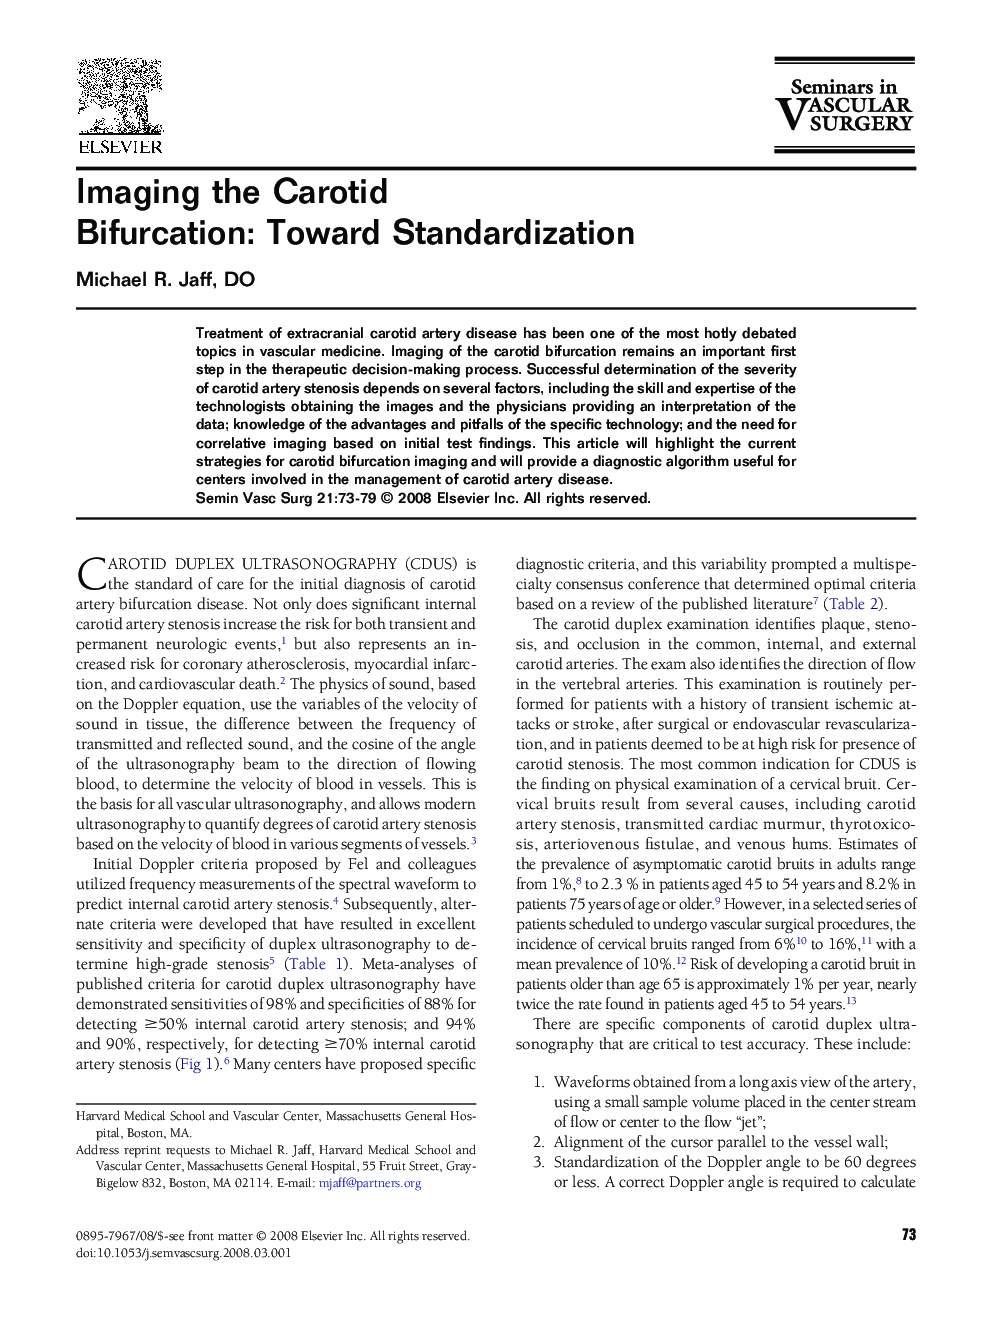 Imaging the Carotid Bifurcation: Toward Standardization